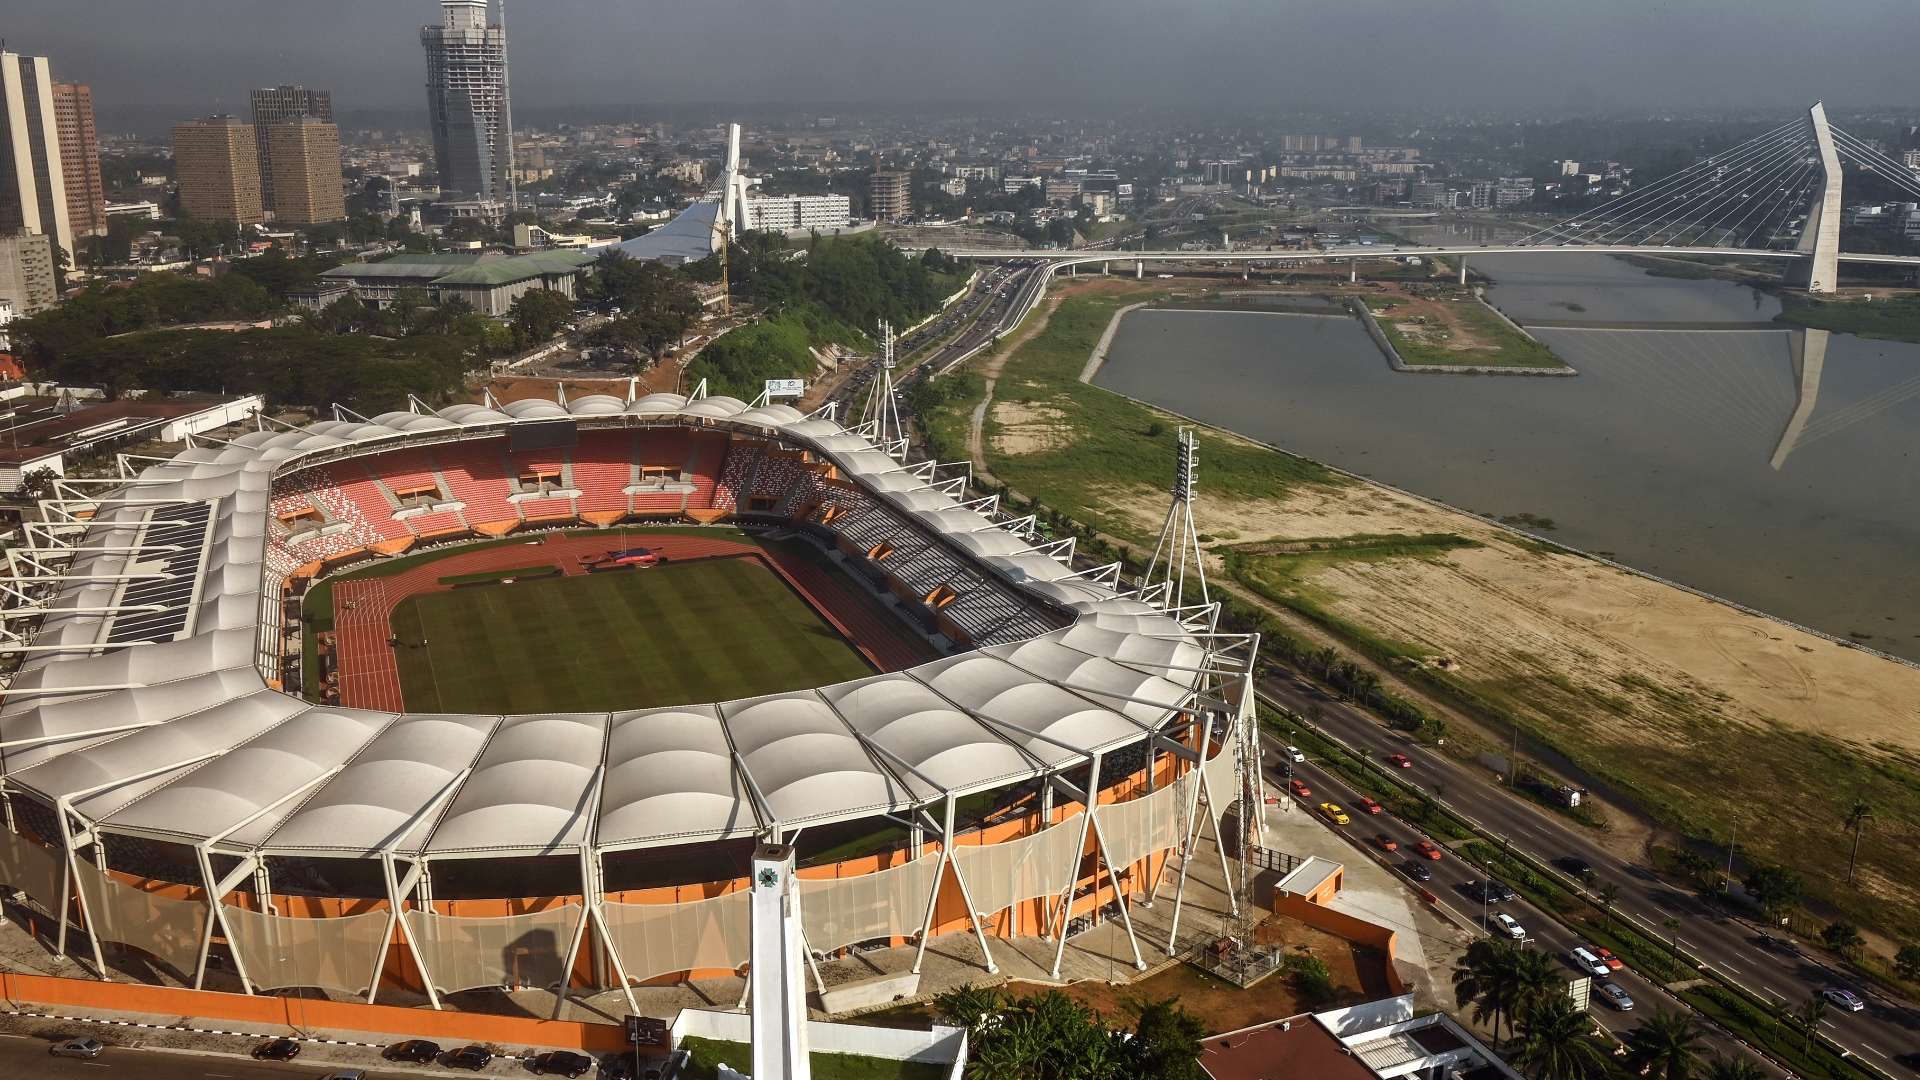 The Alassane Ouattara Stadium 